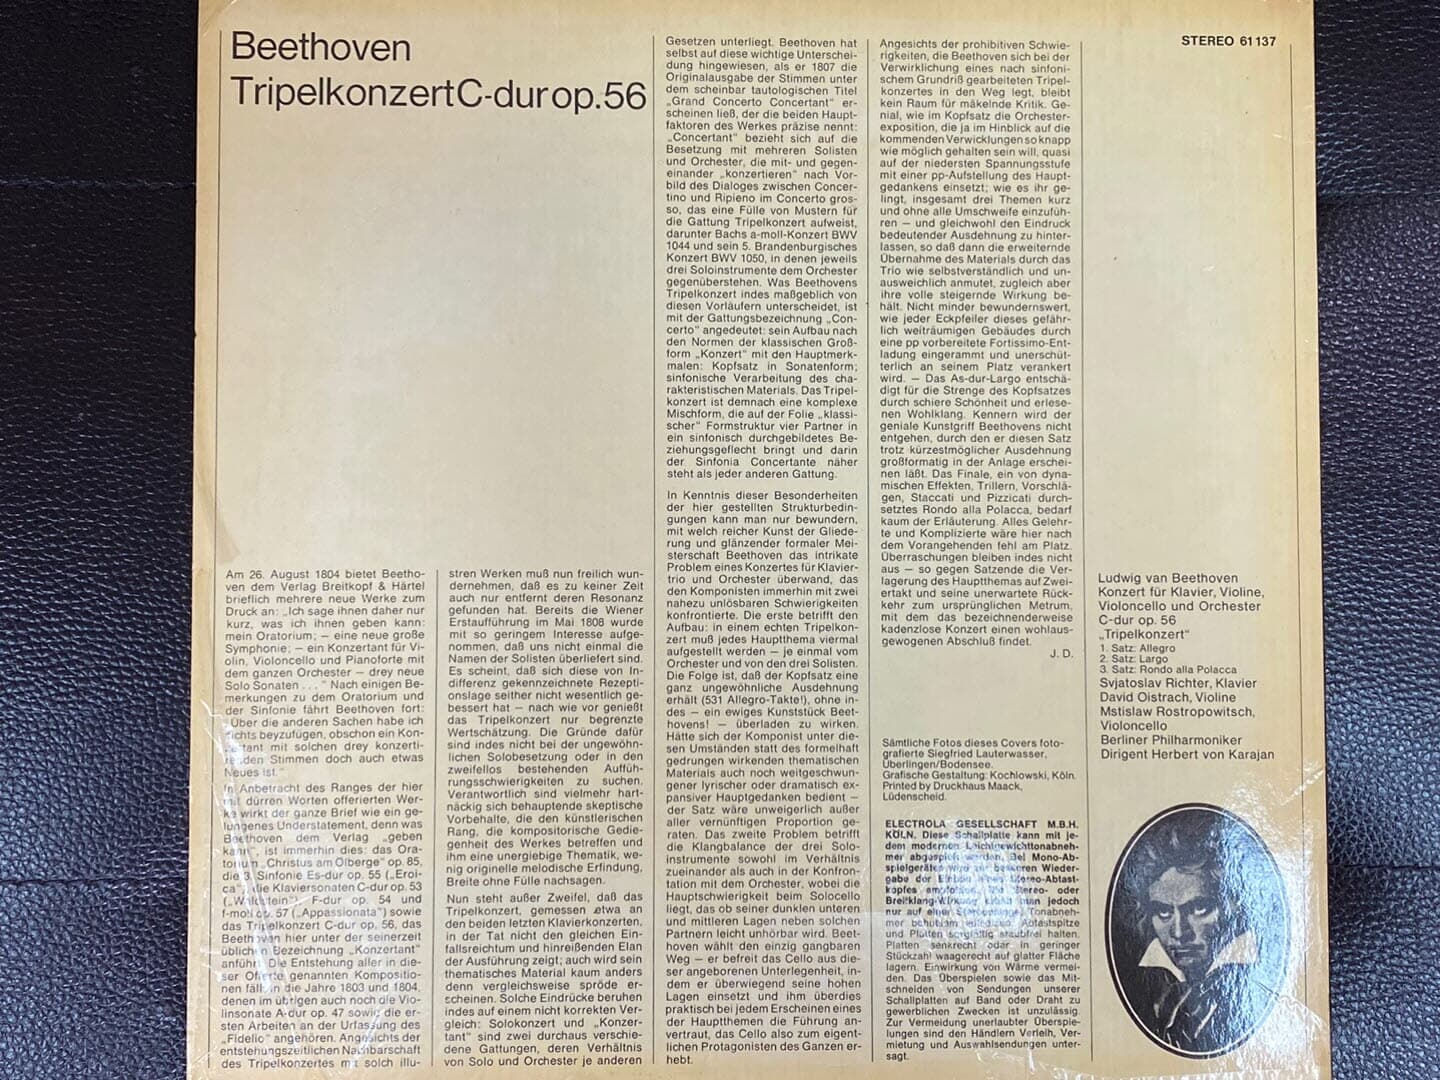 [LP] 카라얀,오이스트라흐,로스트로포비치,리히터 - Beethoven Tripelkonzert C-dur op.56 LP [독일반]